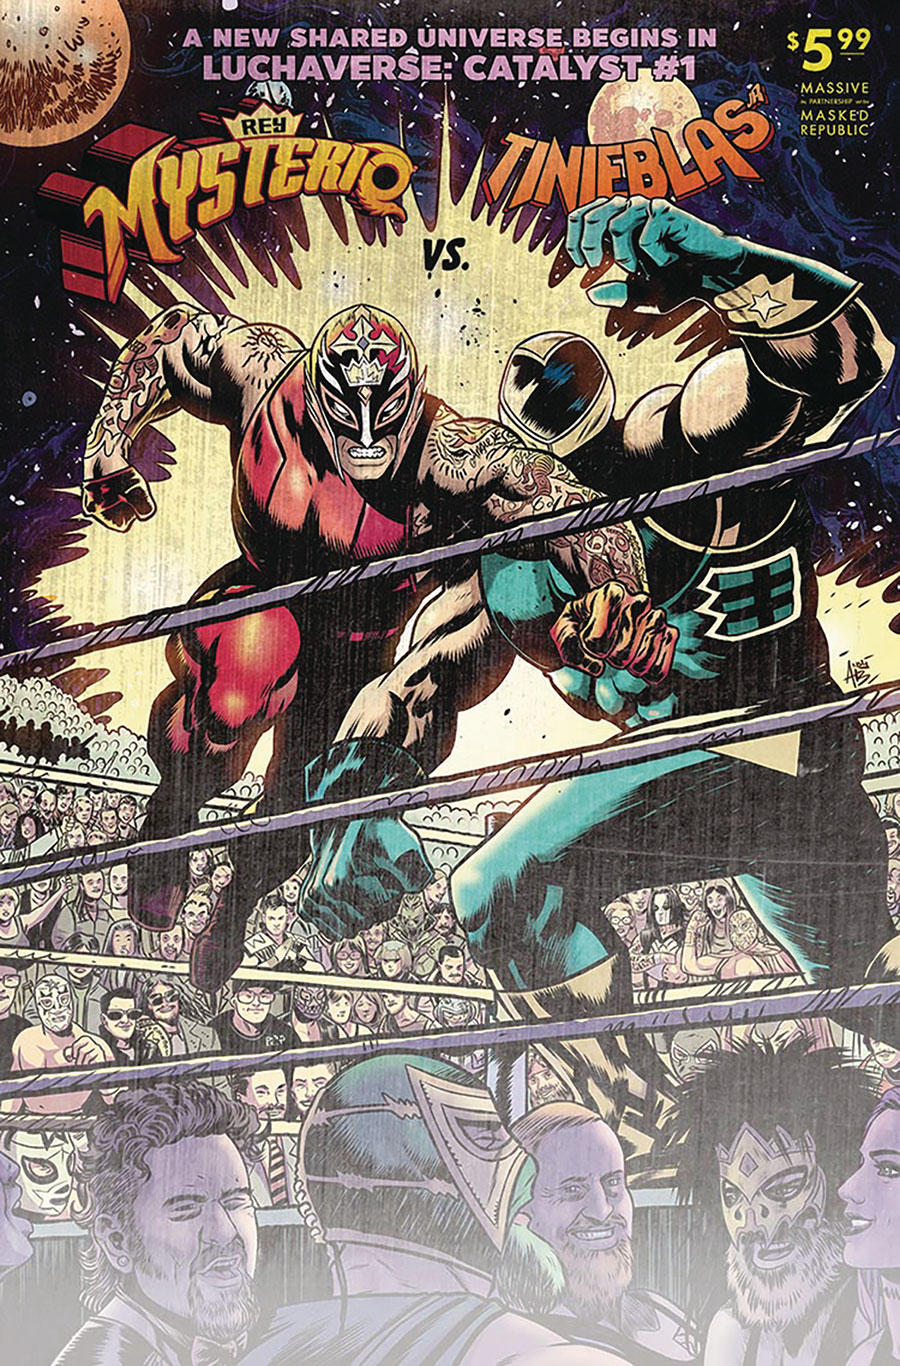 Luchaverse Catalyst #1 Rey Mysterio Tinieblas Jr Cover L Deluxe Andy Belanger Superman vs Ali Homage Metal Cover